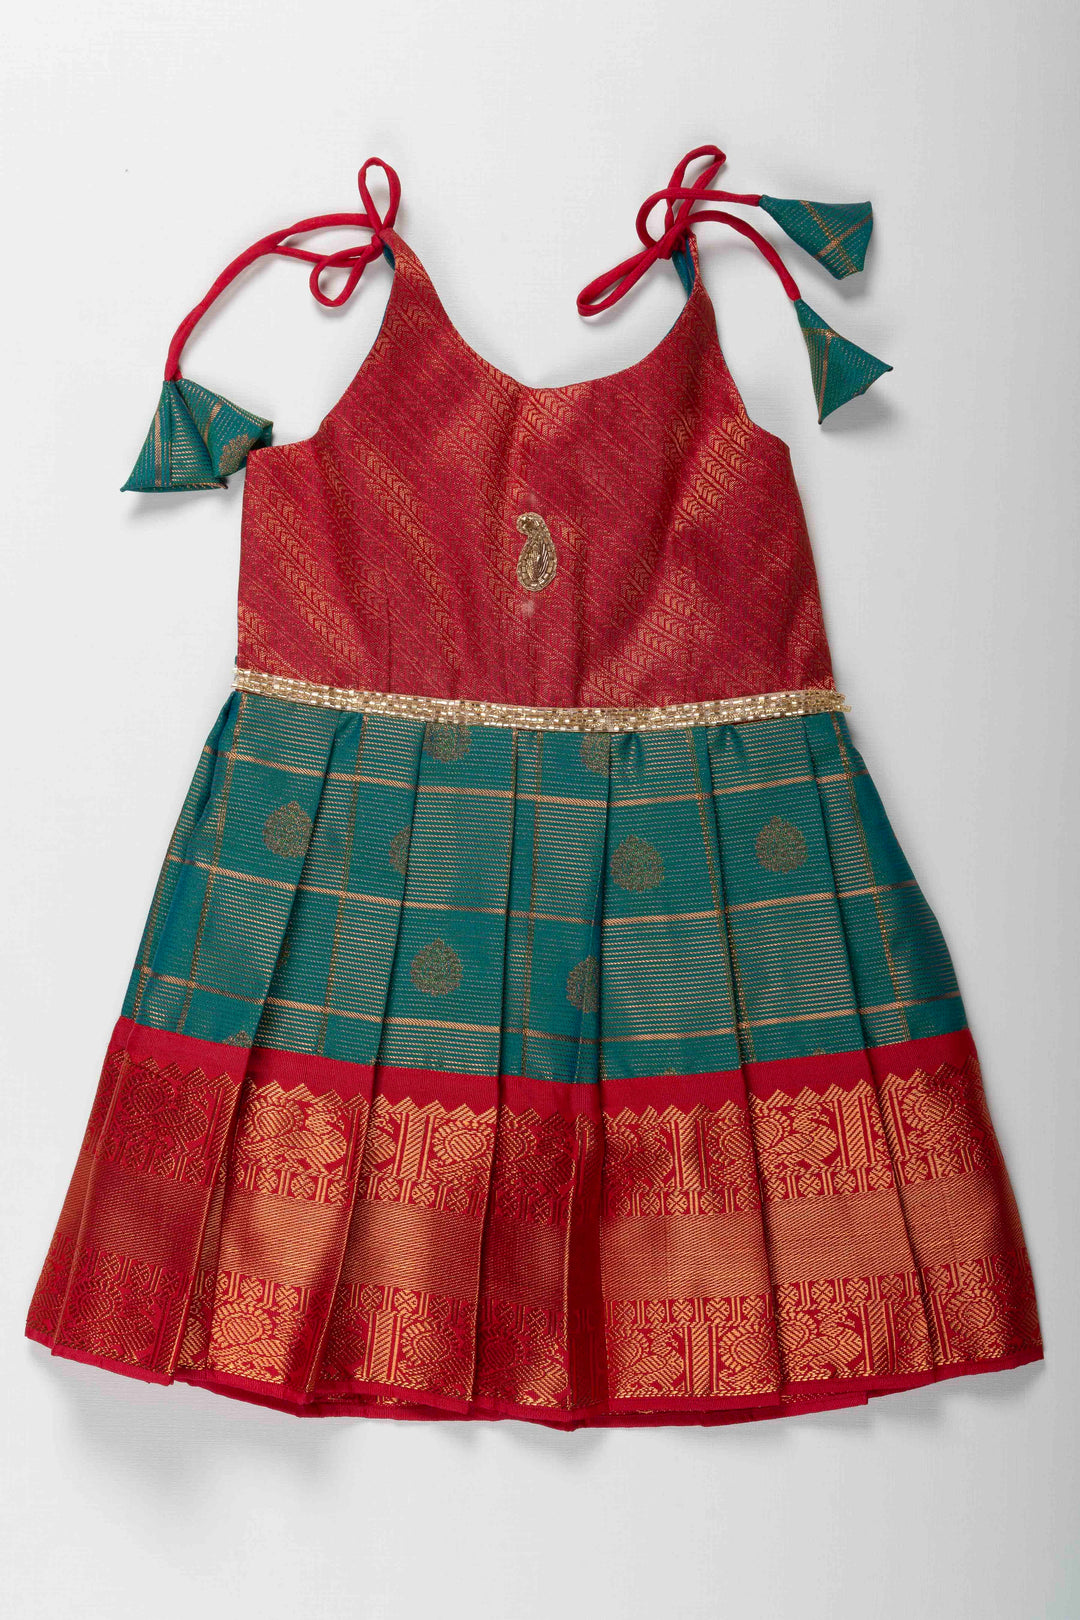 The Nesavu Tie-up Frock Kanchipuram Silk Tie-Up Frock for Infant Girls - Ideal for Barasala Nesavu 14 (6M) / Green / Style 1 T404A-14 Kanchipuram Silk Tie-Up Frock for Infant Girls - Perfect for Barasala